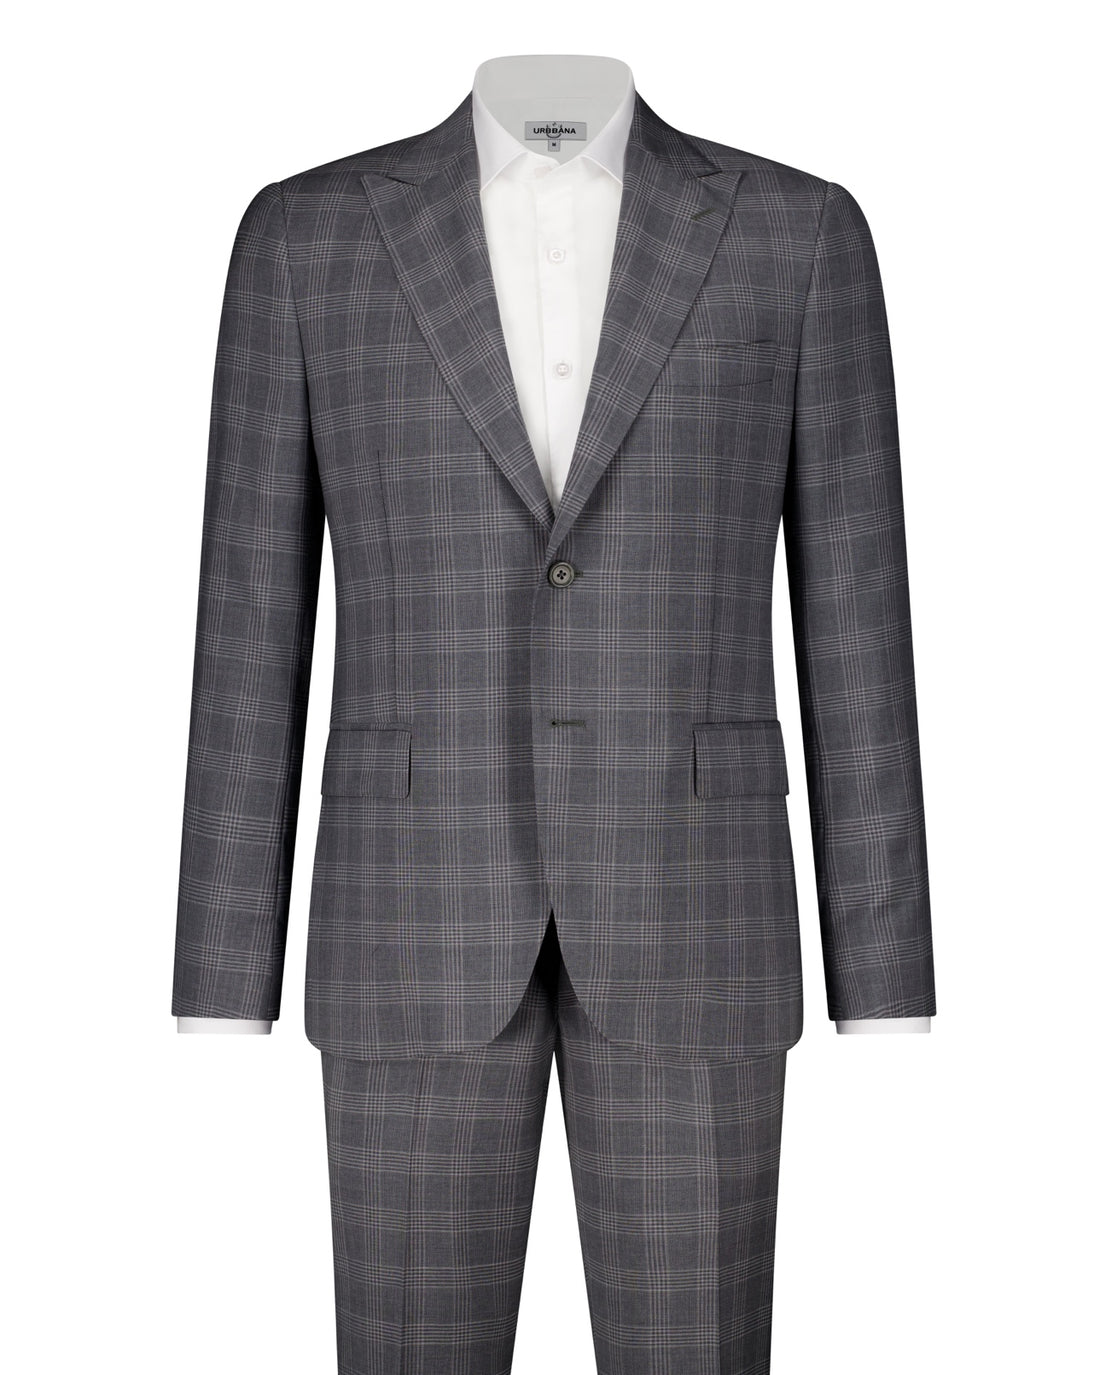 Marcello Zegna Cloth Suit - Charcoal